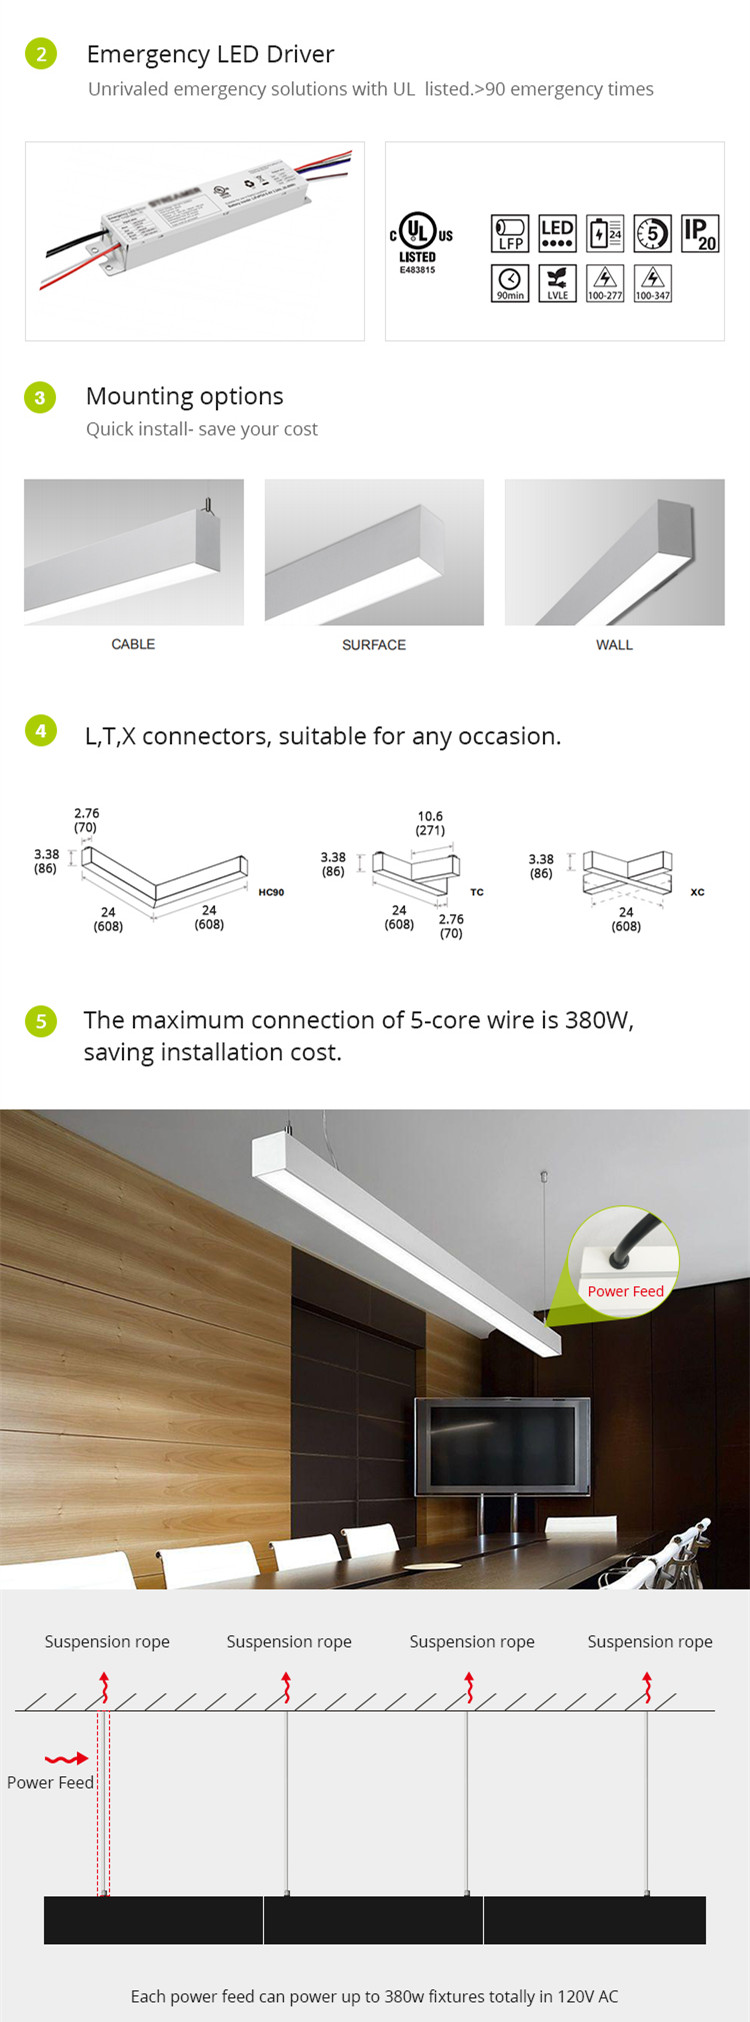 ETL 130lm/w UGR 19 Linear Wall Light Fixture, 4 Ft Linear Led Light, Linear Light Fitting